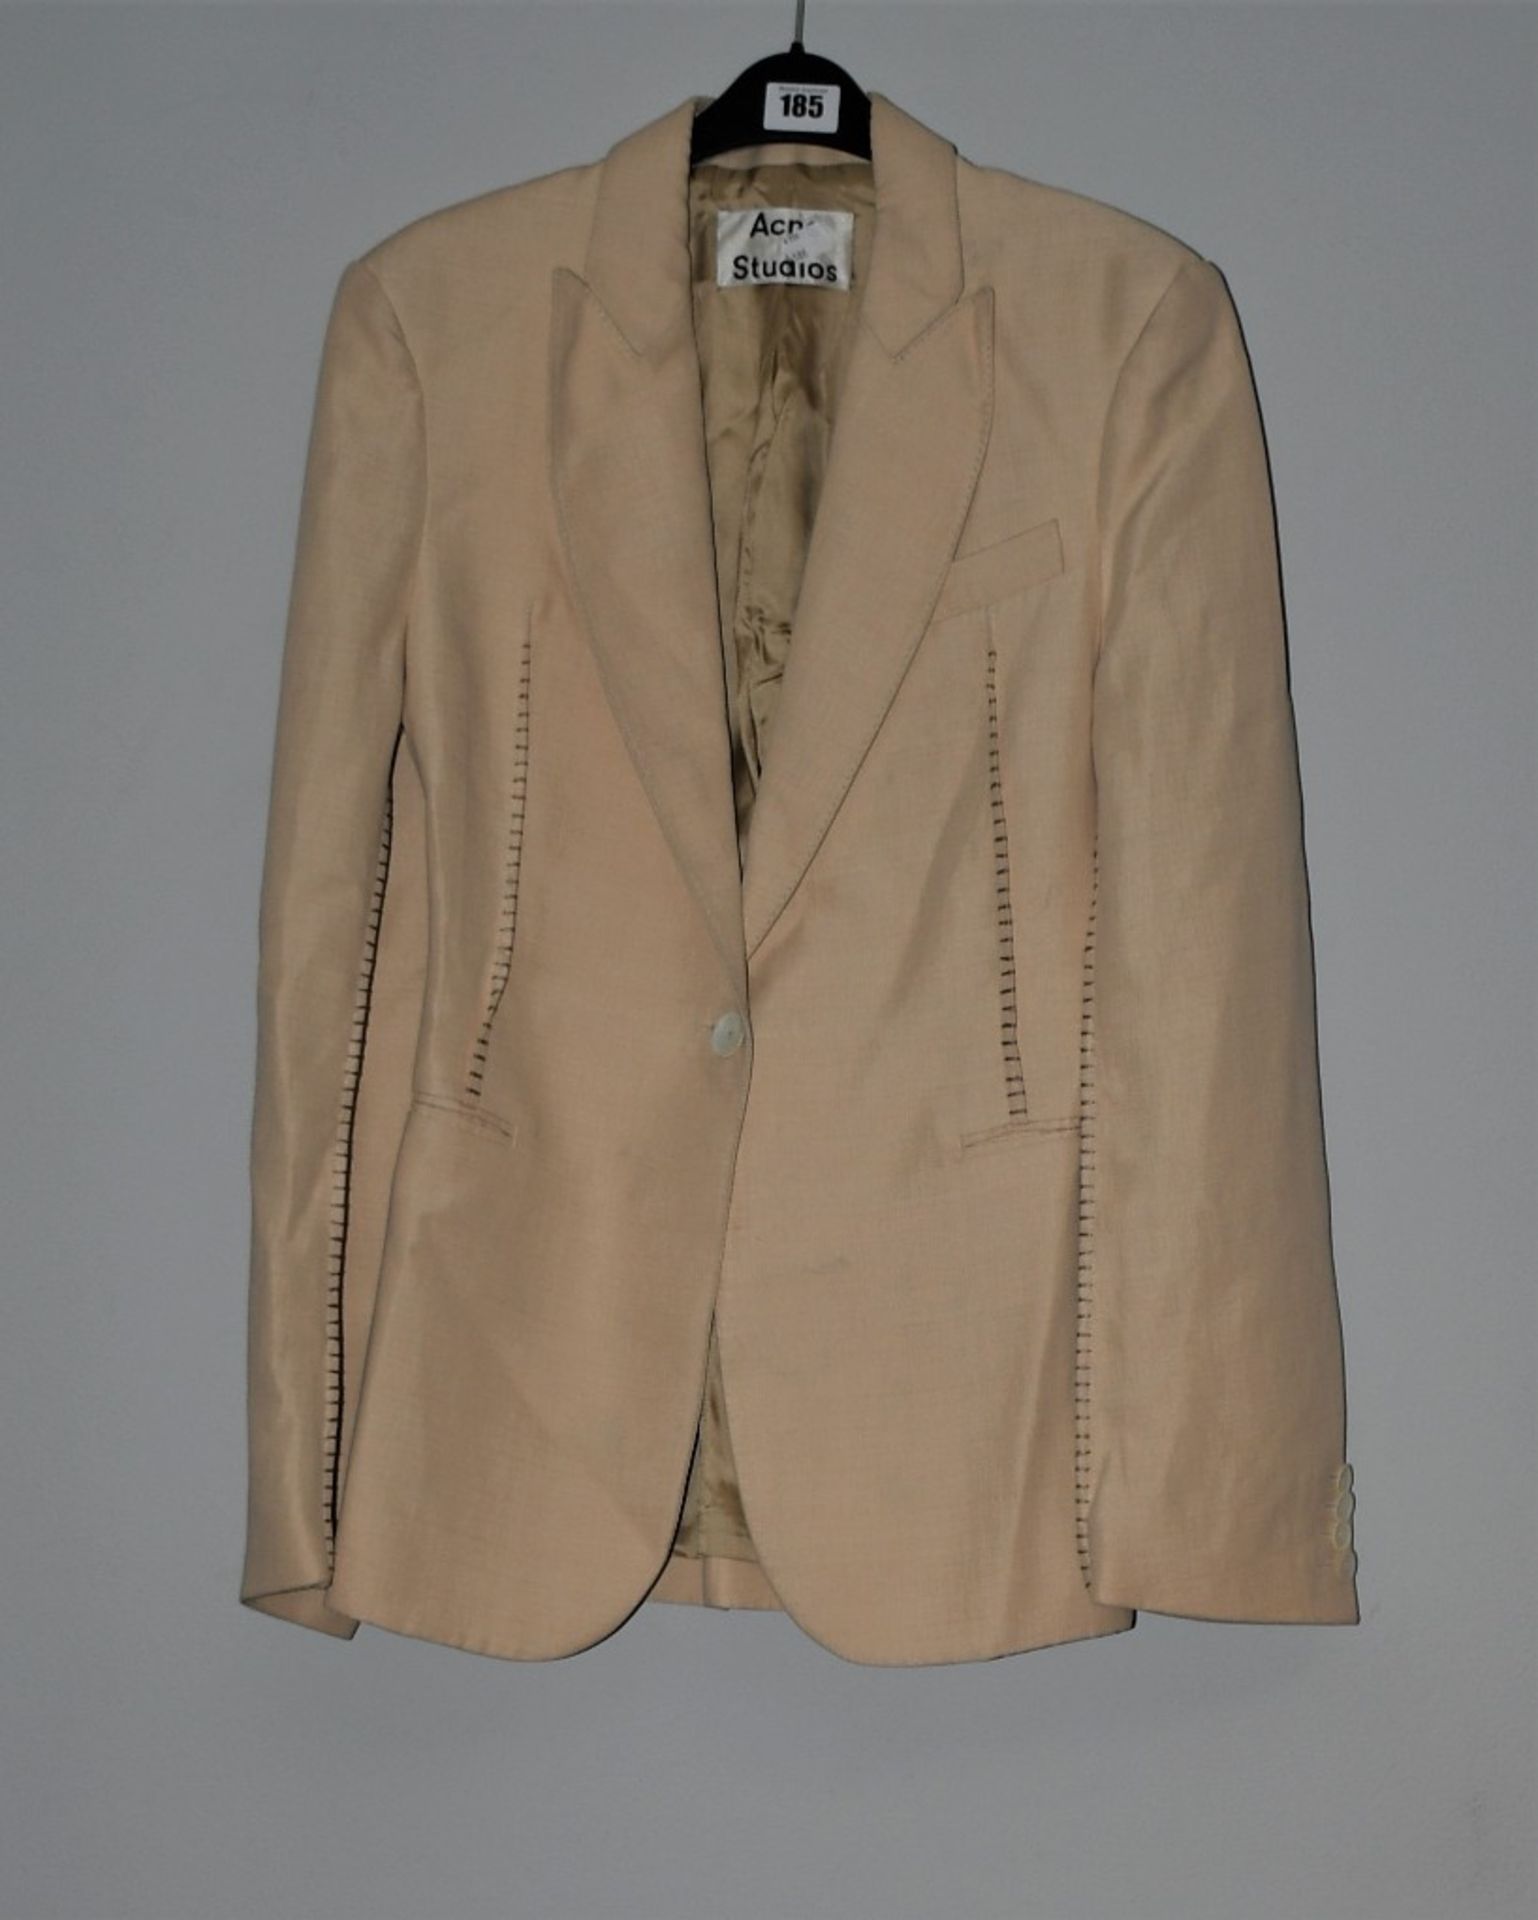 One as new Acne Studios blanket-stitch suit jacket Cream beige 2 (size unknown).